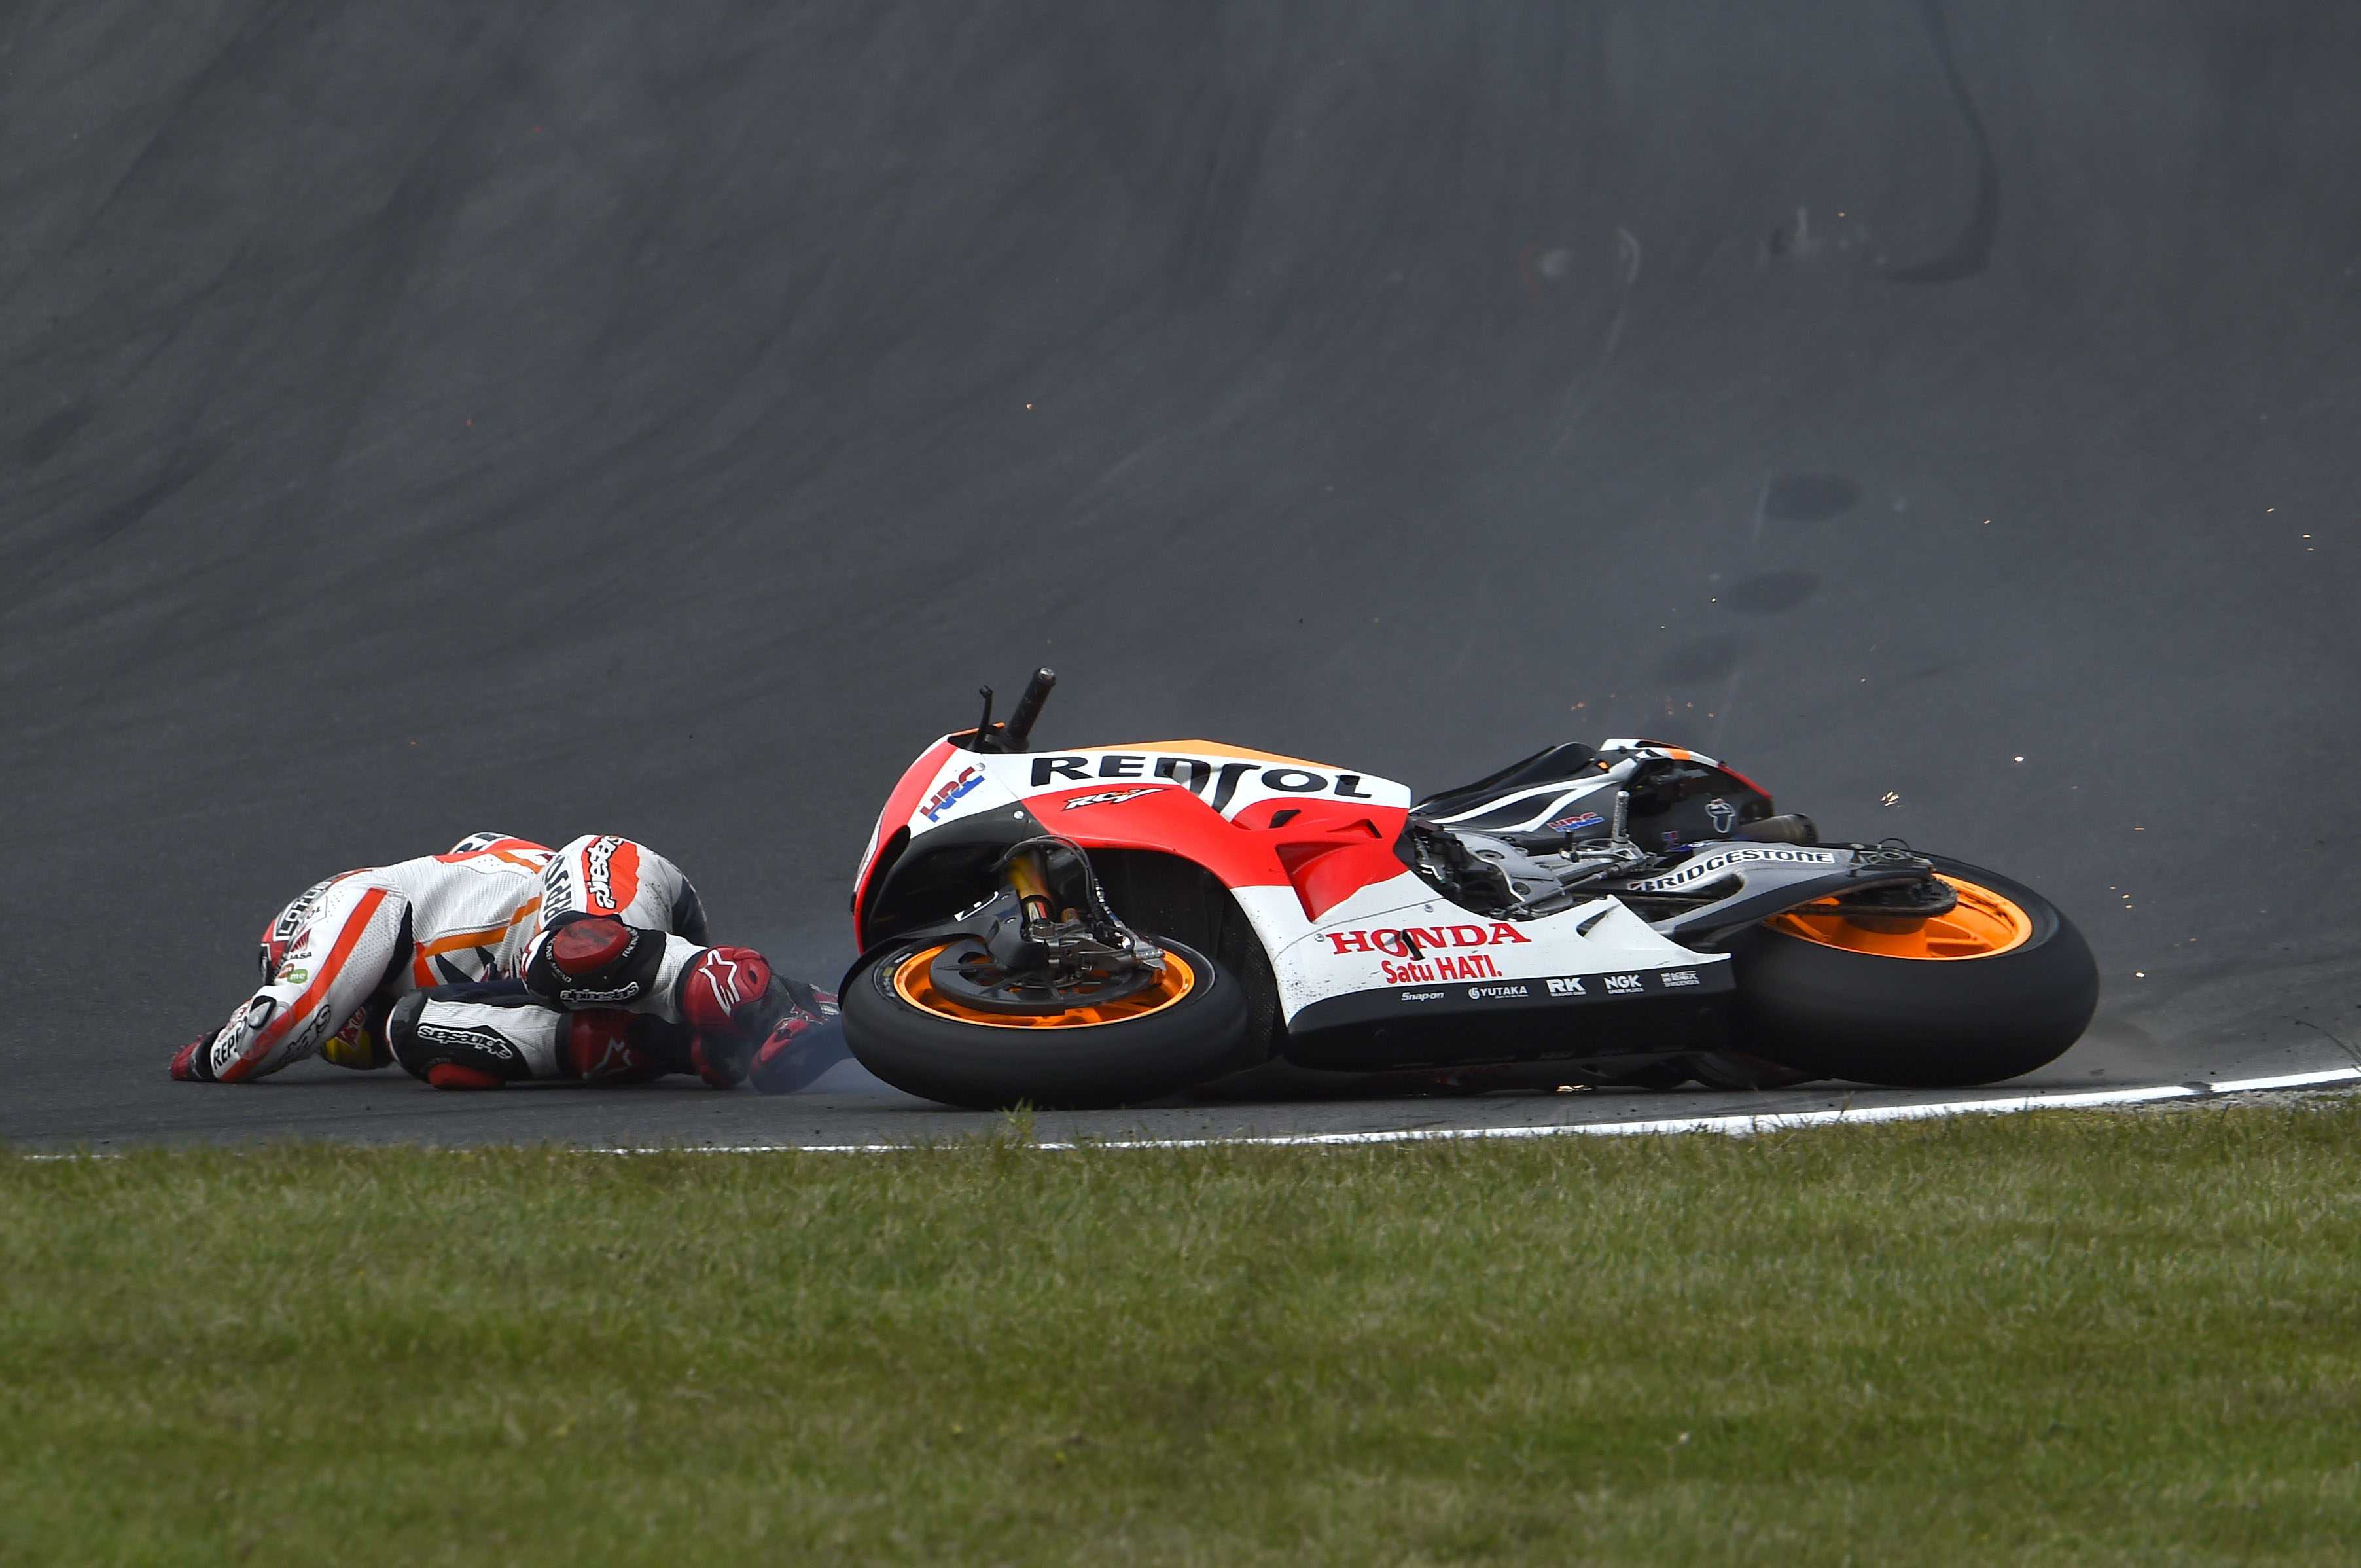 Marquez crashes out of Australian Grand Prix